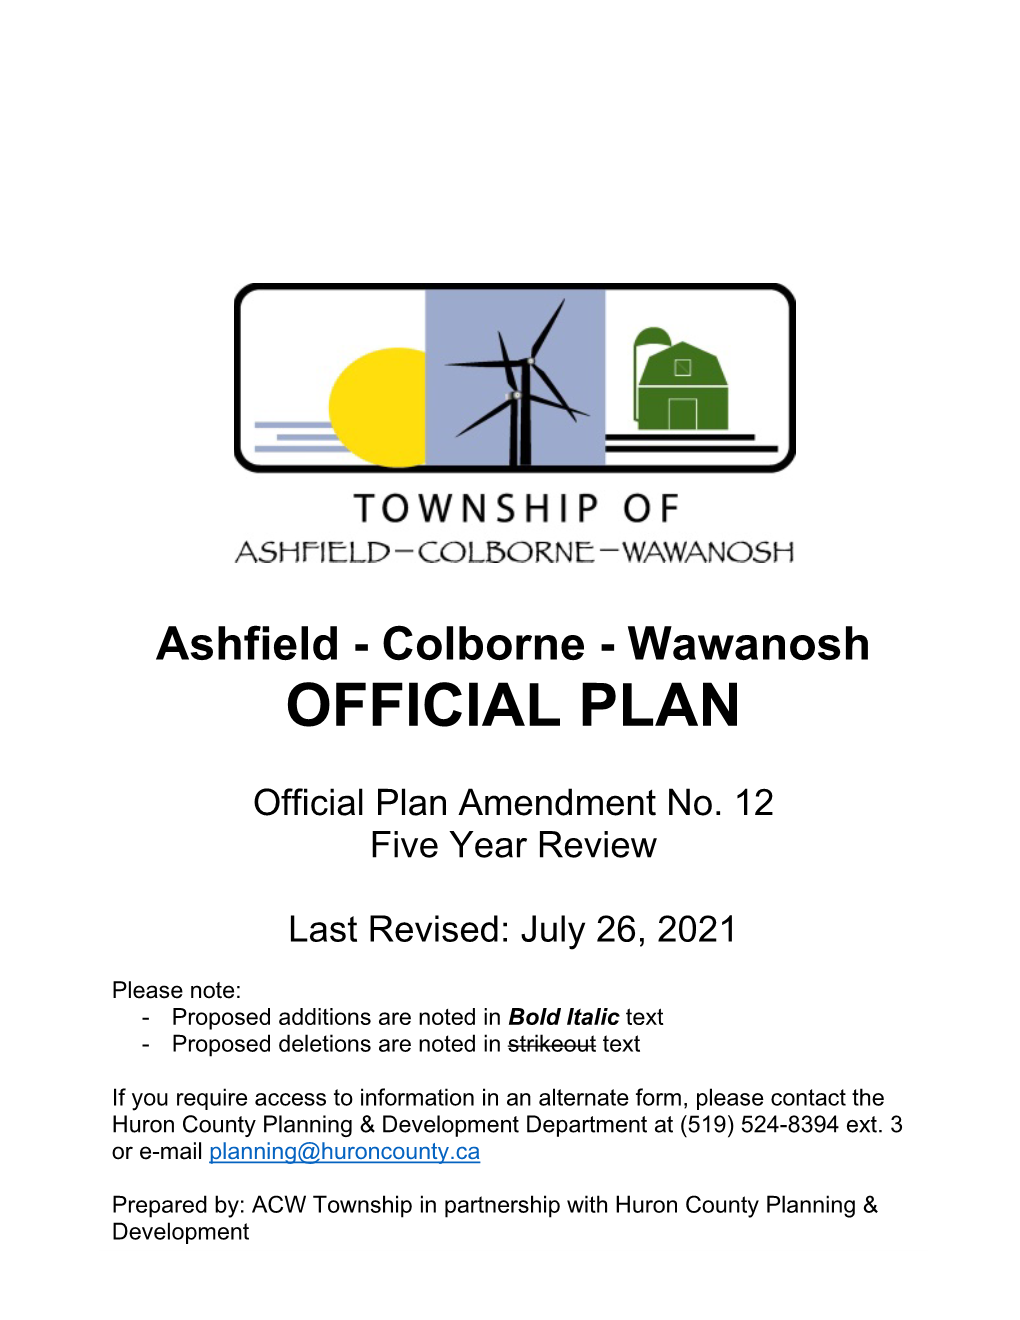 Township of Ashfield-Colborne-Wawanosh Official Plan